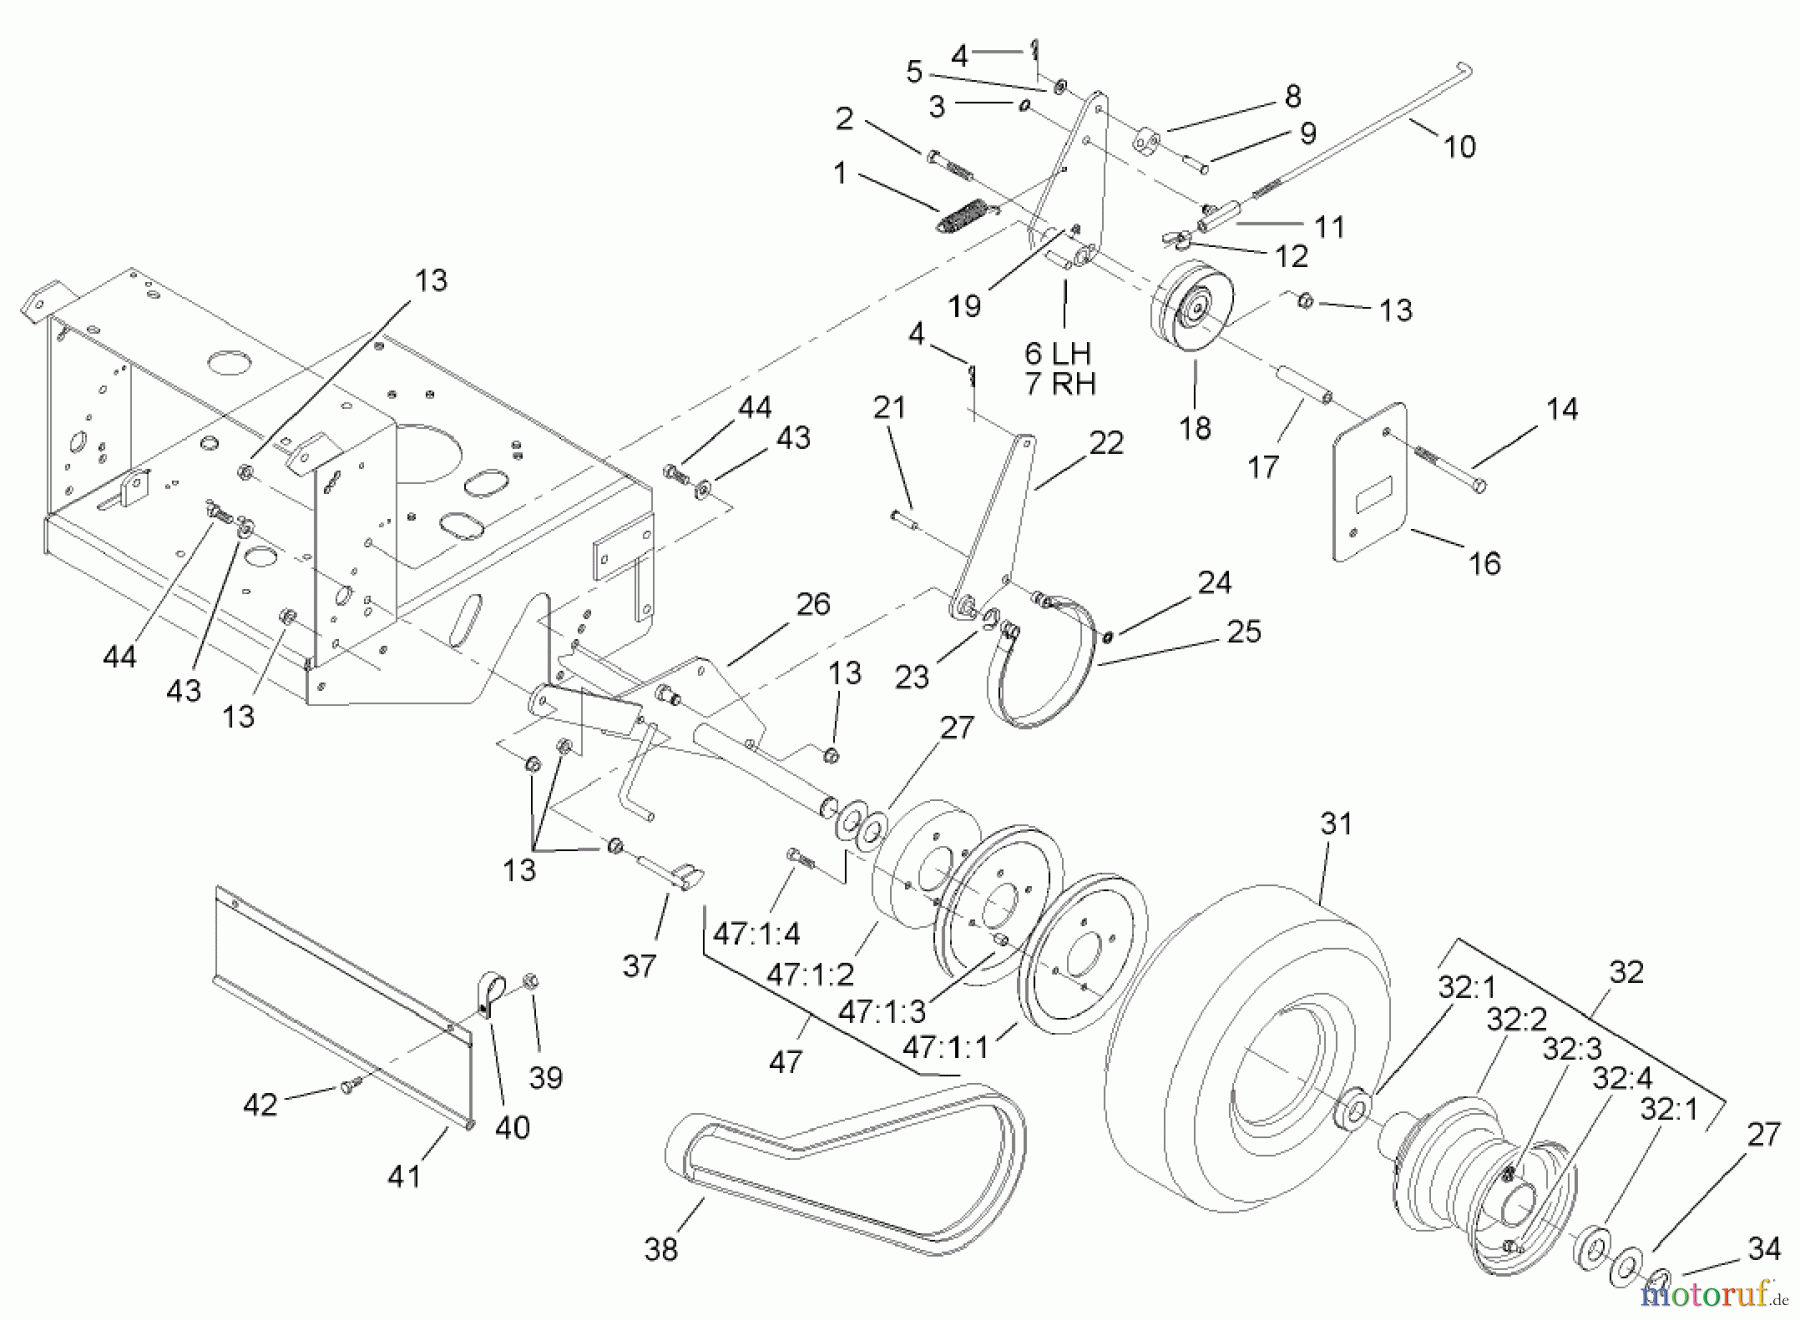  Rasenmäher für Großflächen 30193 - Toro Mid-Size ProLine Mower, Gear Drive, 12.5 hp, 36